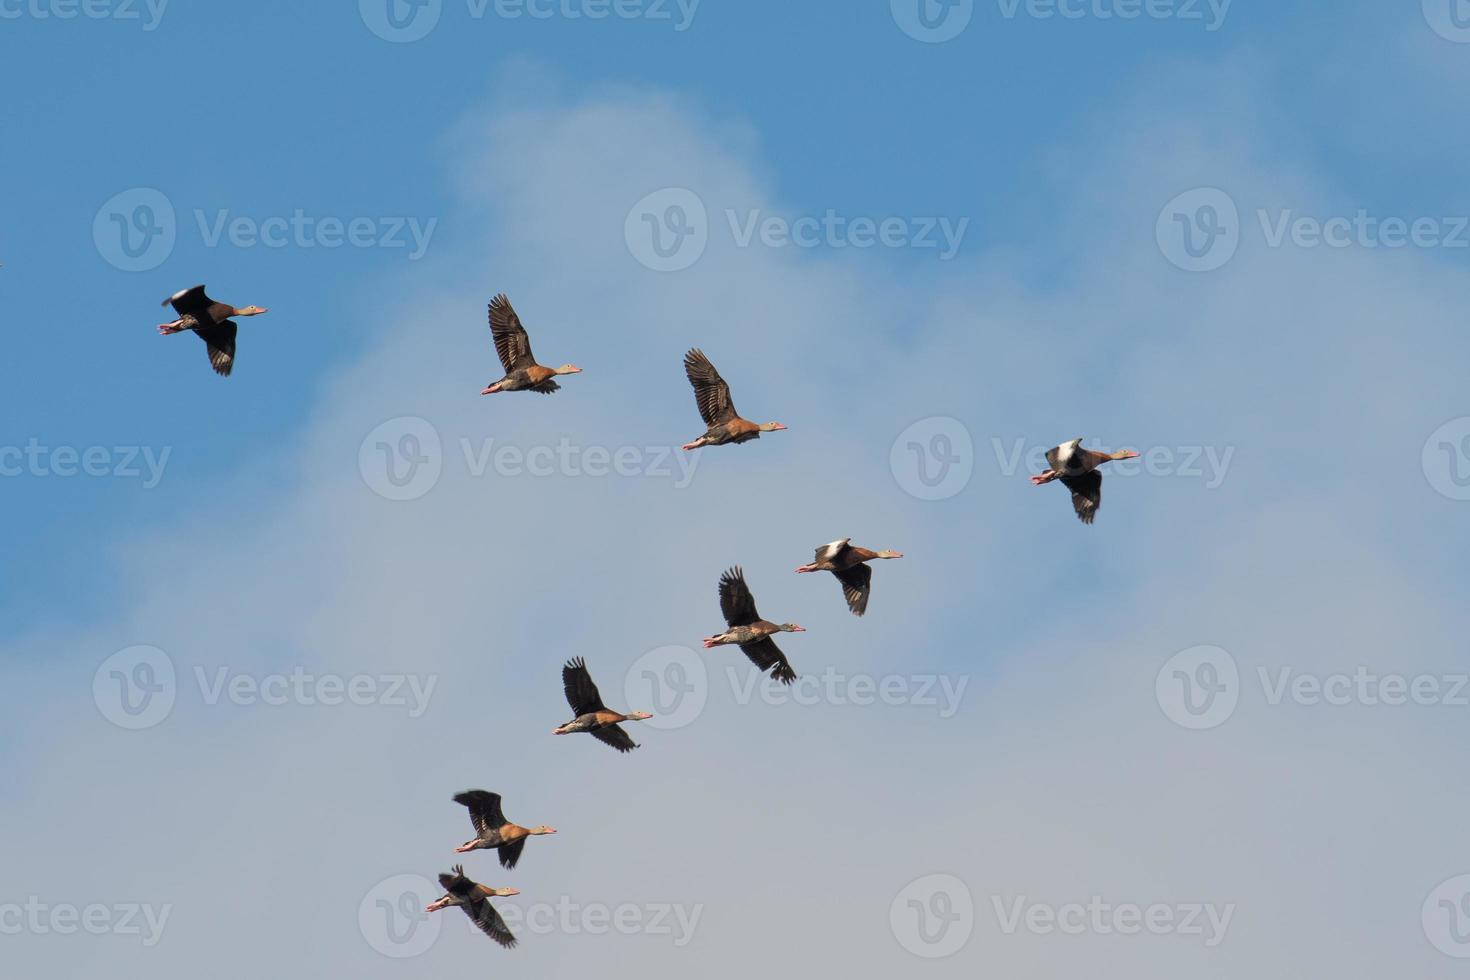 neuf canards siffleurs en formation av alors qu'ils volent en groupe. photo